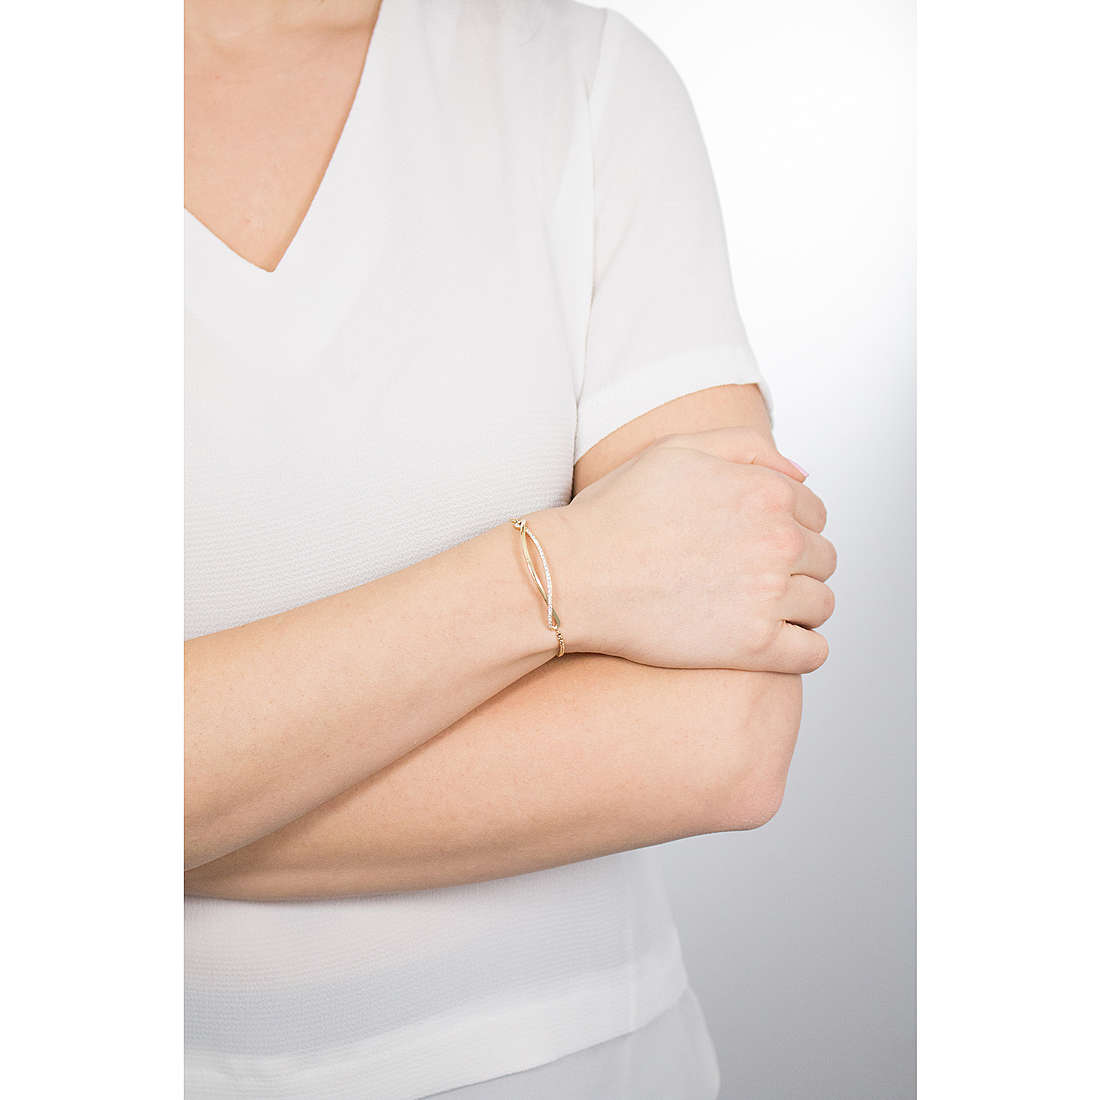 Michael Kors bracciali Brilliance donna MKJ6617710 indosso